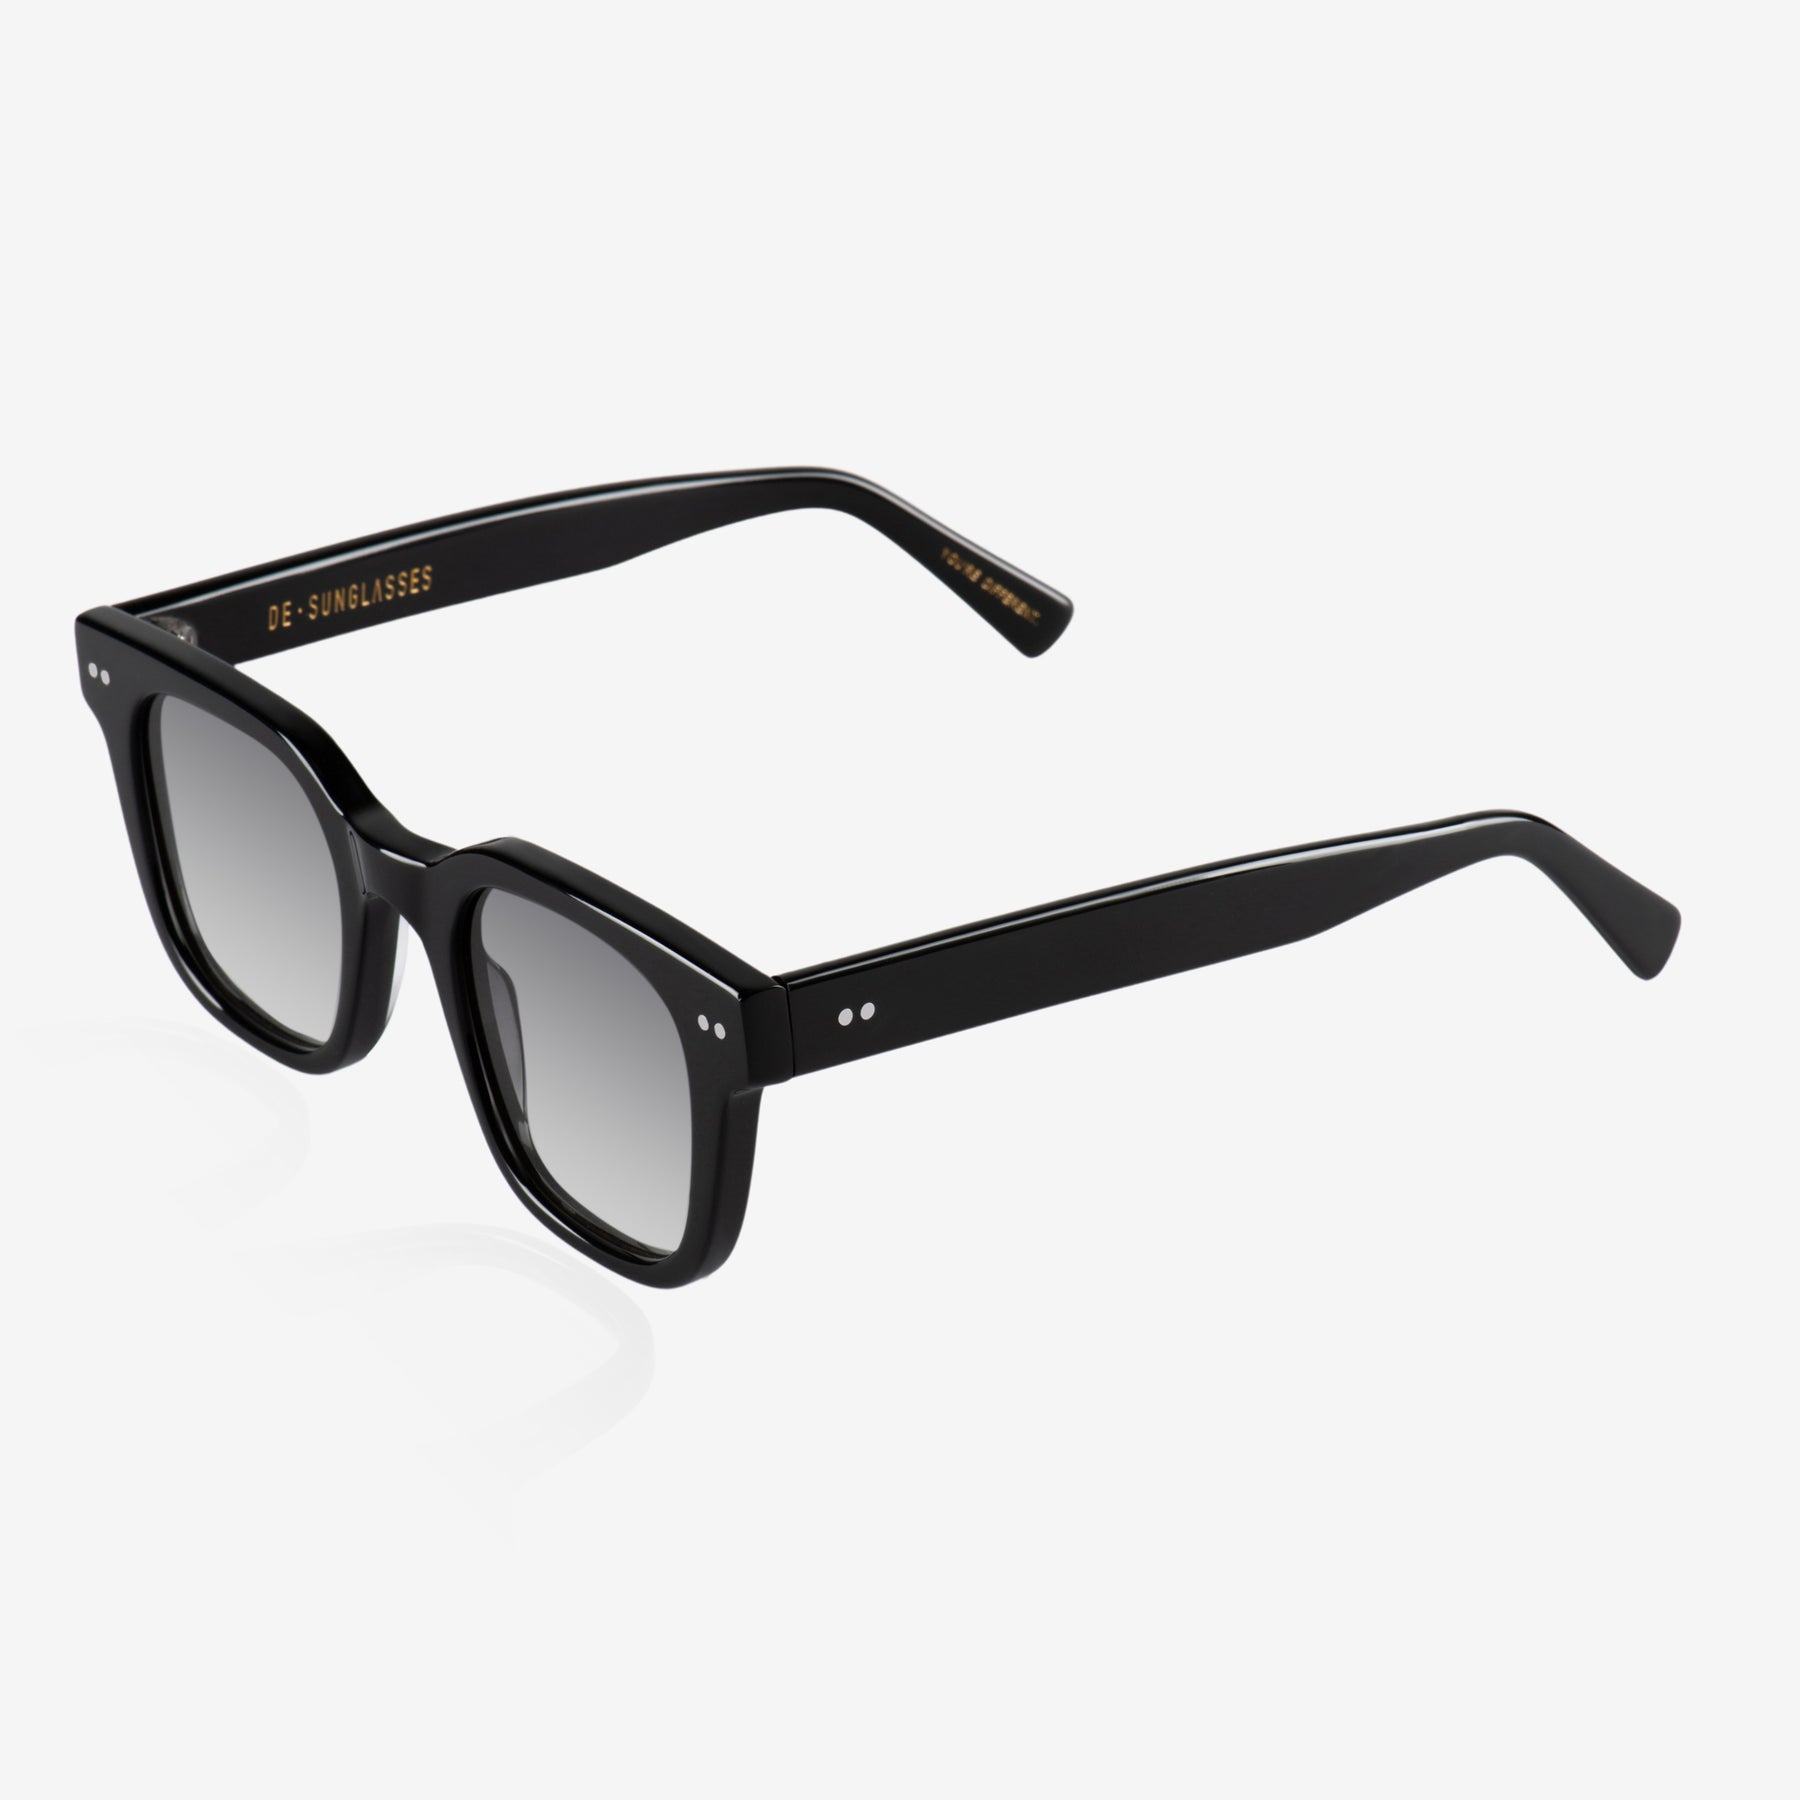 De-sunglasses| Dash noir | Sunglasses for men and women